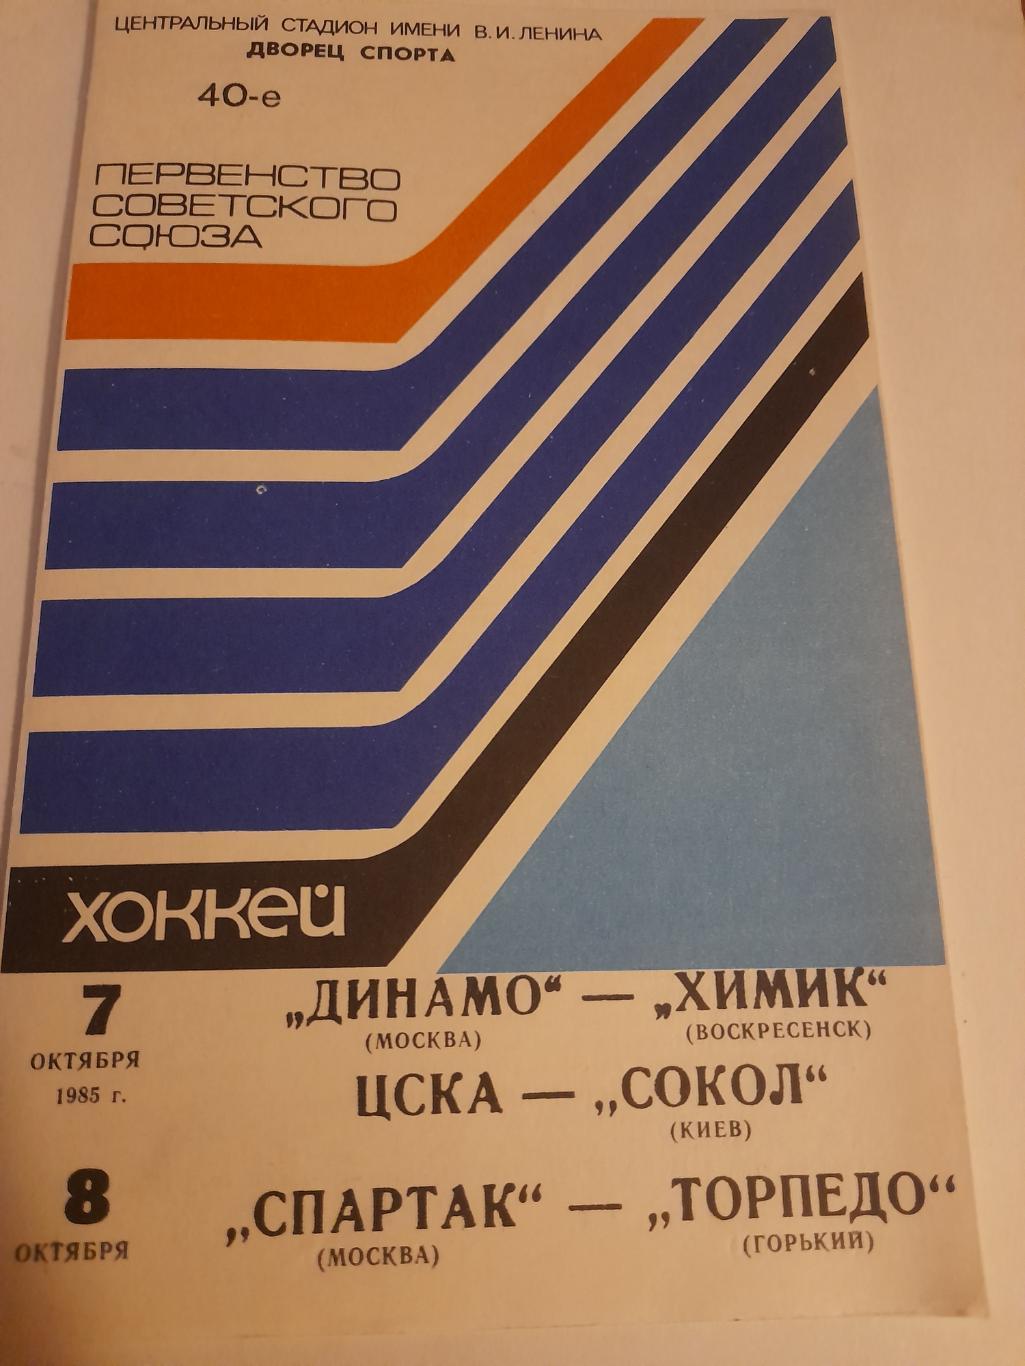 Динамо Москва - Химик / ЦСКА - Сокол / Спартак - Горький 1985